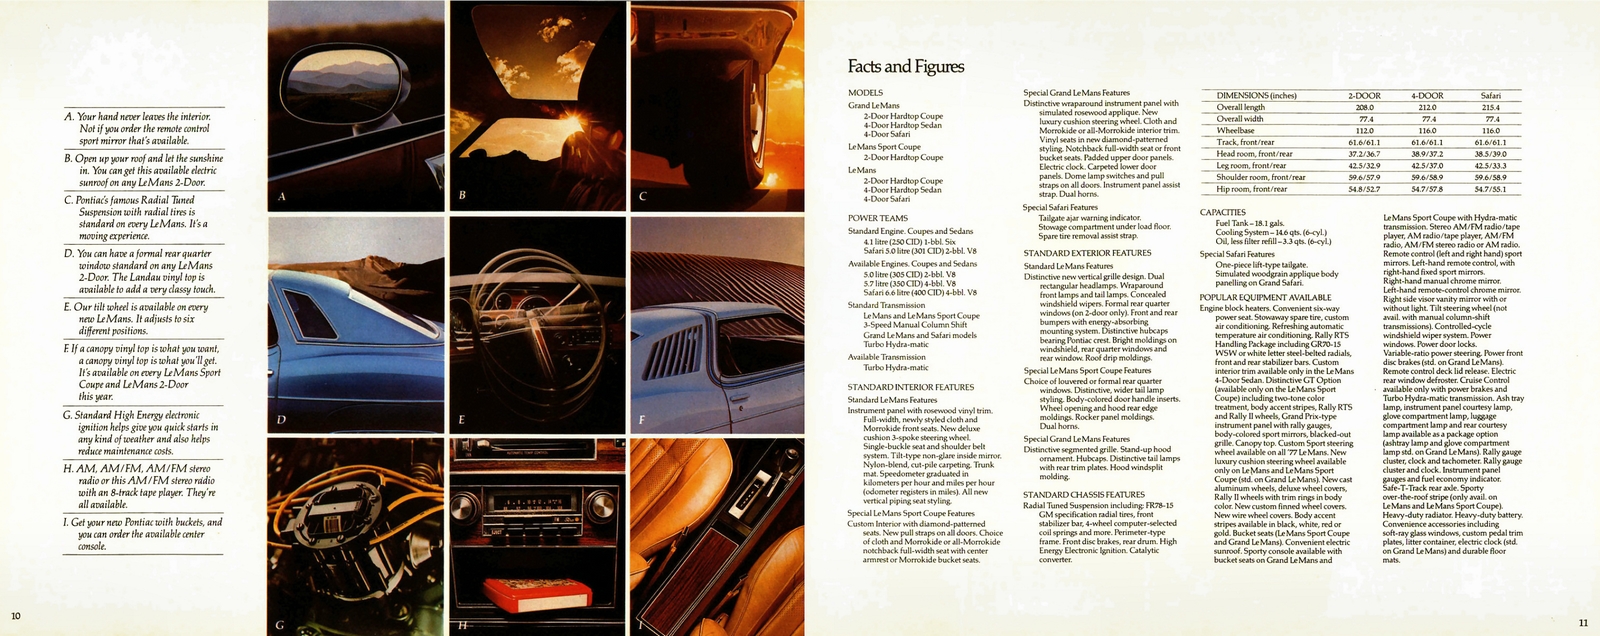 n_1977 Pontiac Lemans (Cdn)-10-11.jpg